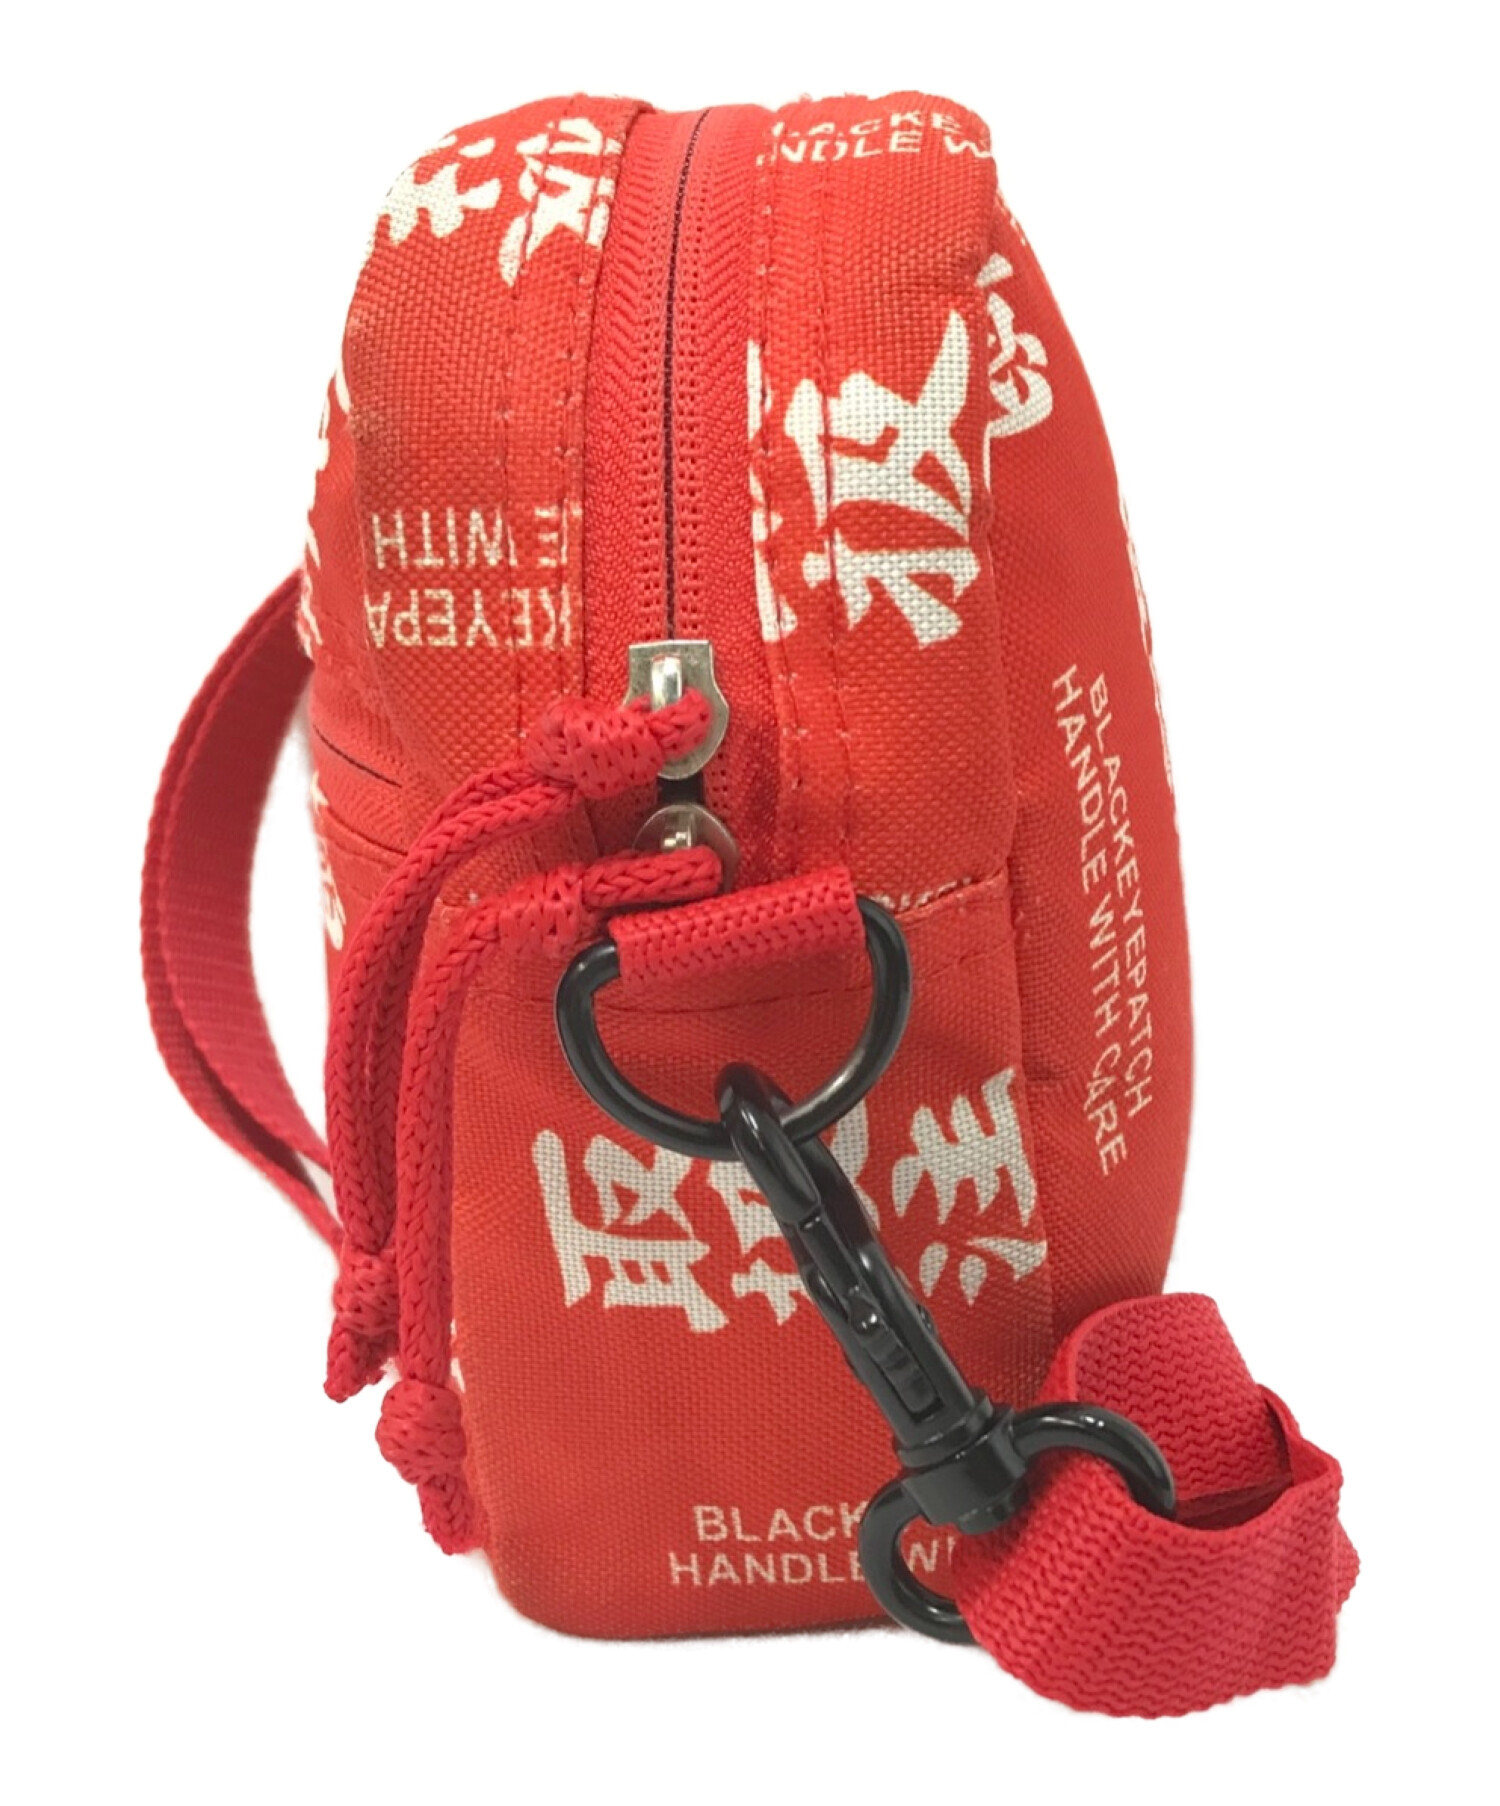 BlackEyePatch (ブラックアイパッチ) LABEL SHOULDER BAG オレンジ サイズ:下記参照